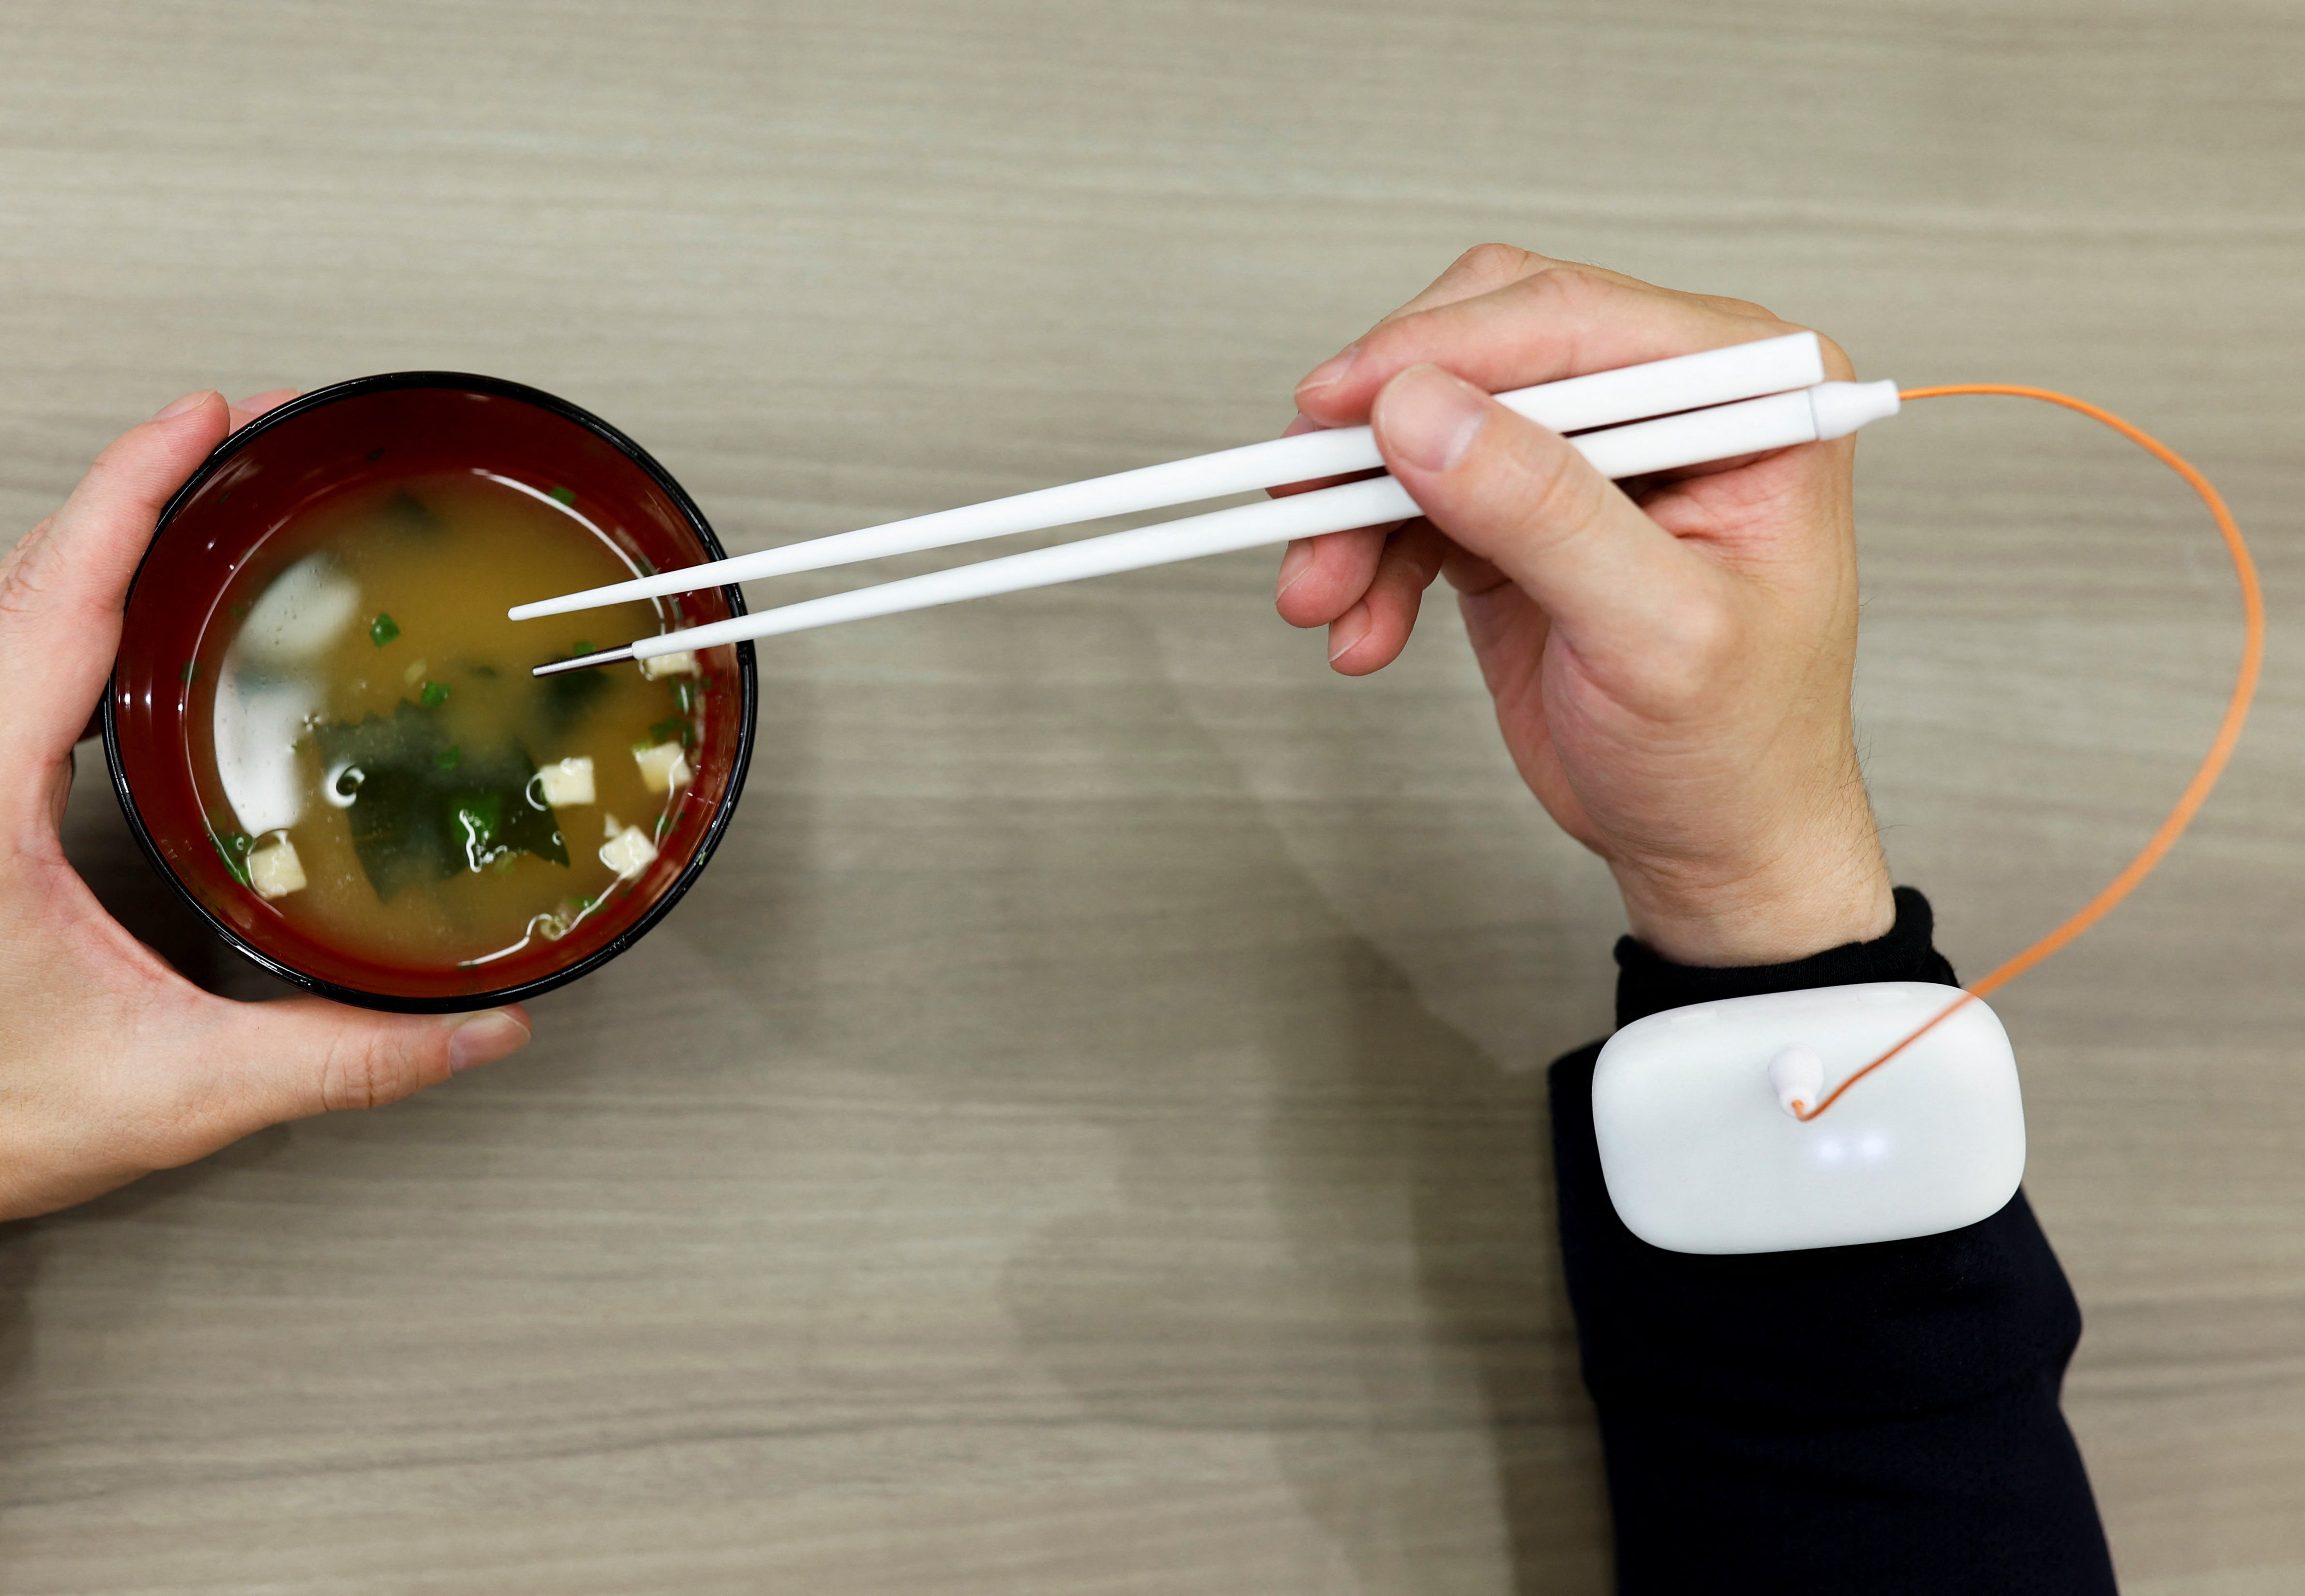 An employee of Kirin Holdings demonstrates chopsticks that can enhance food taste using an electrical stimulation waveform